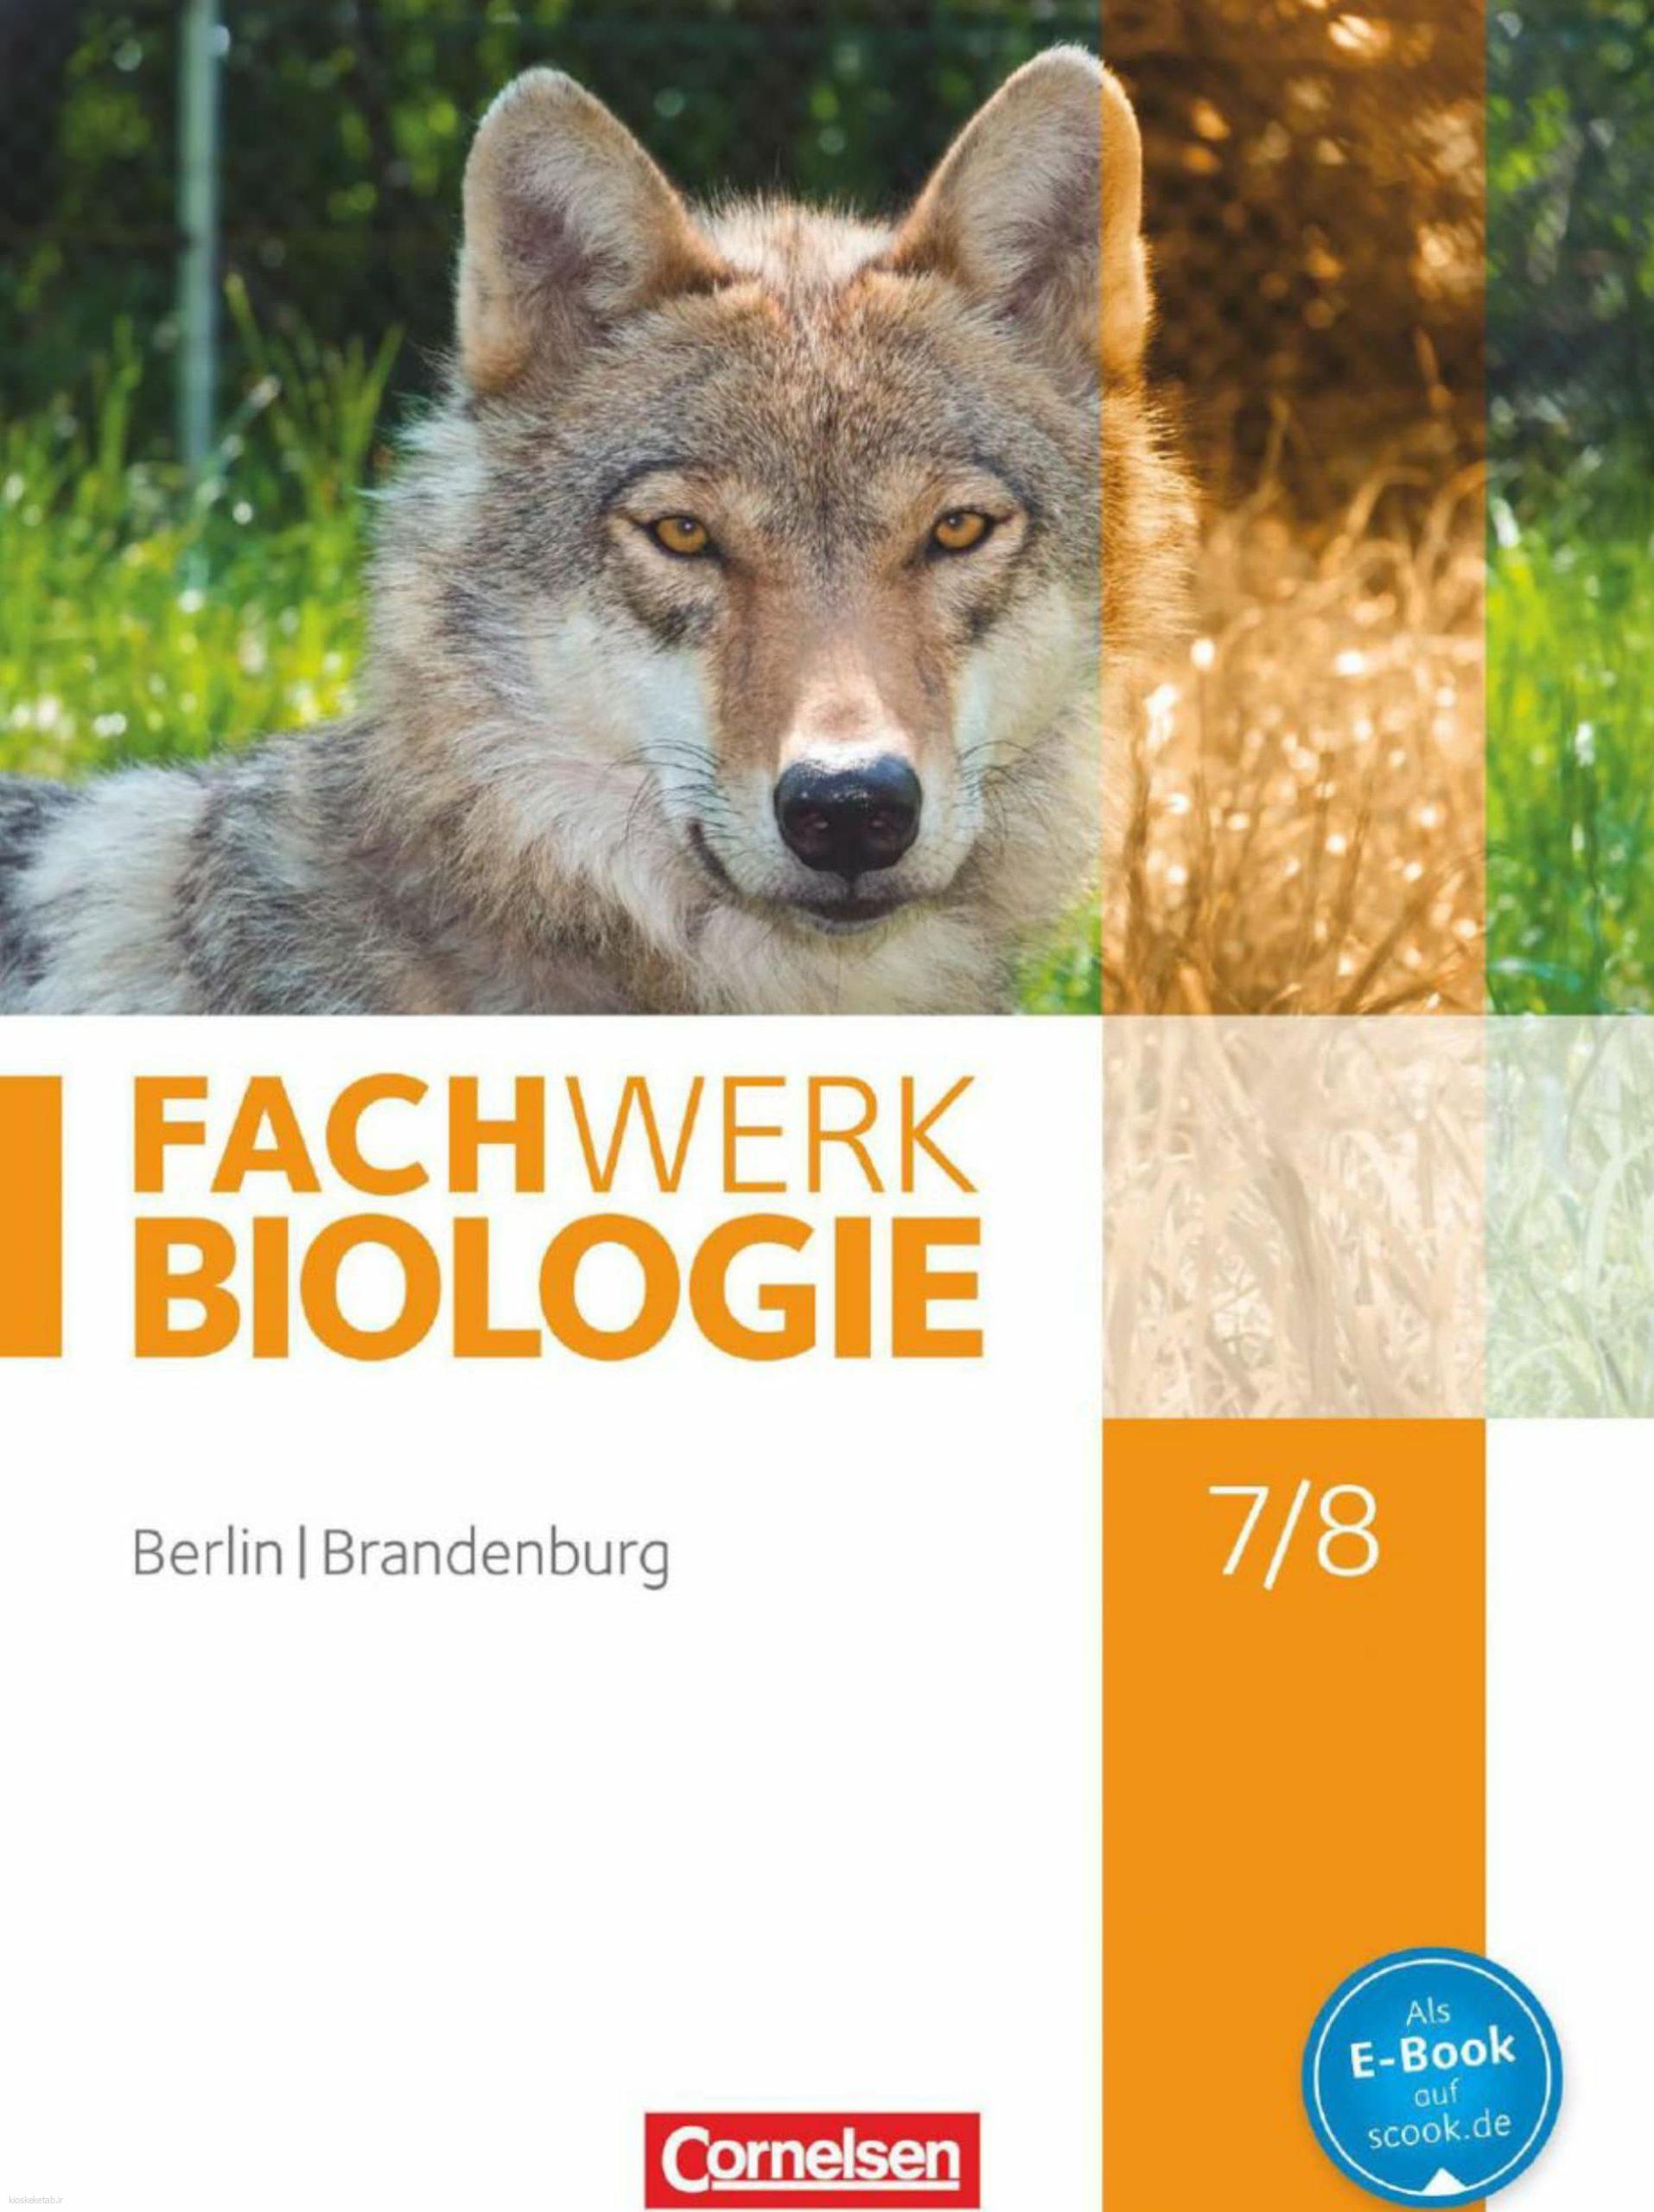 دانلود کتاب آلمانیfachwerk biologie